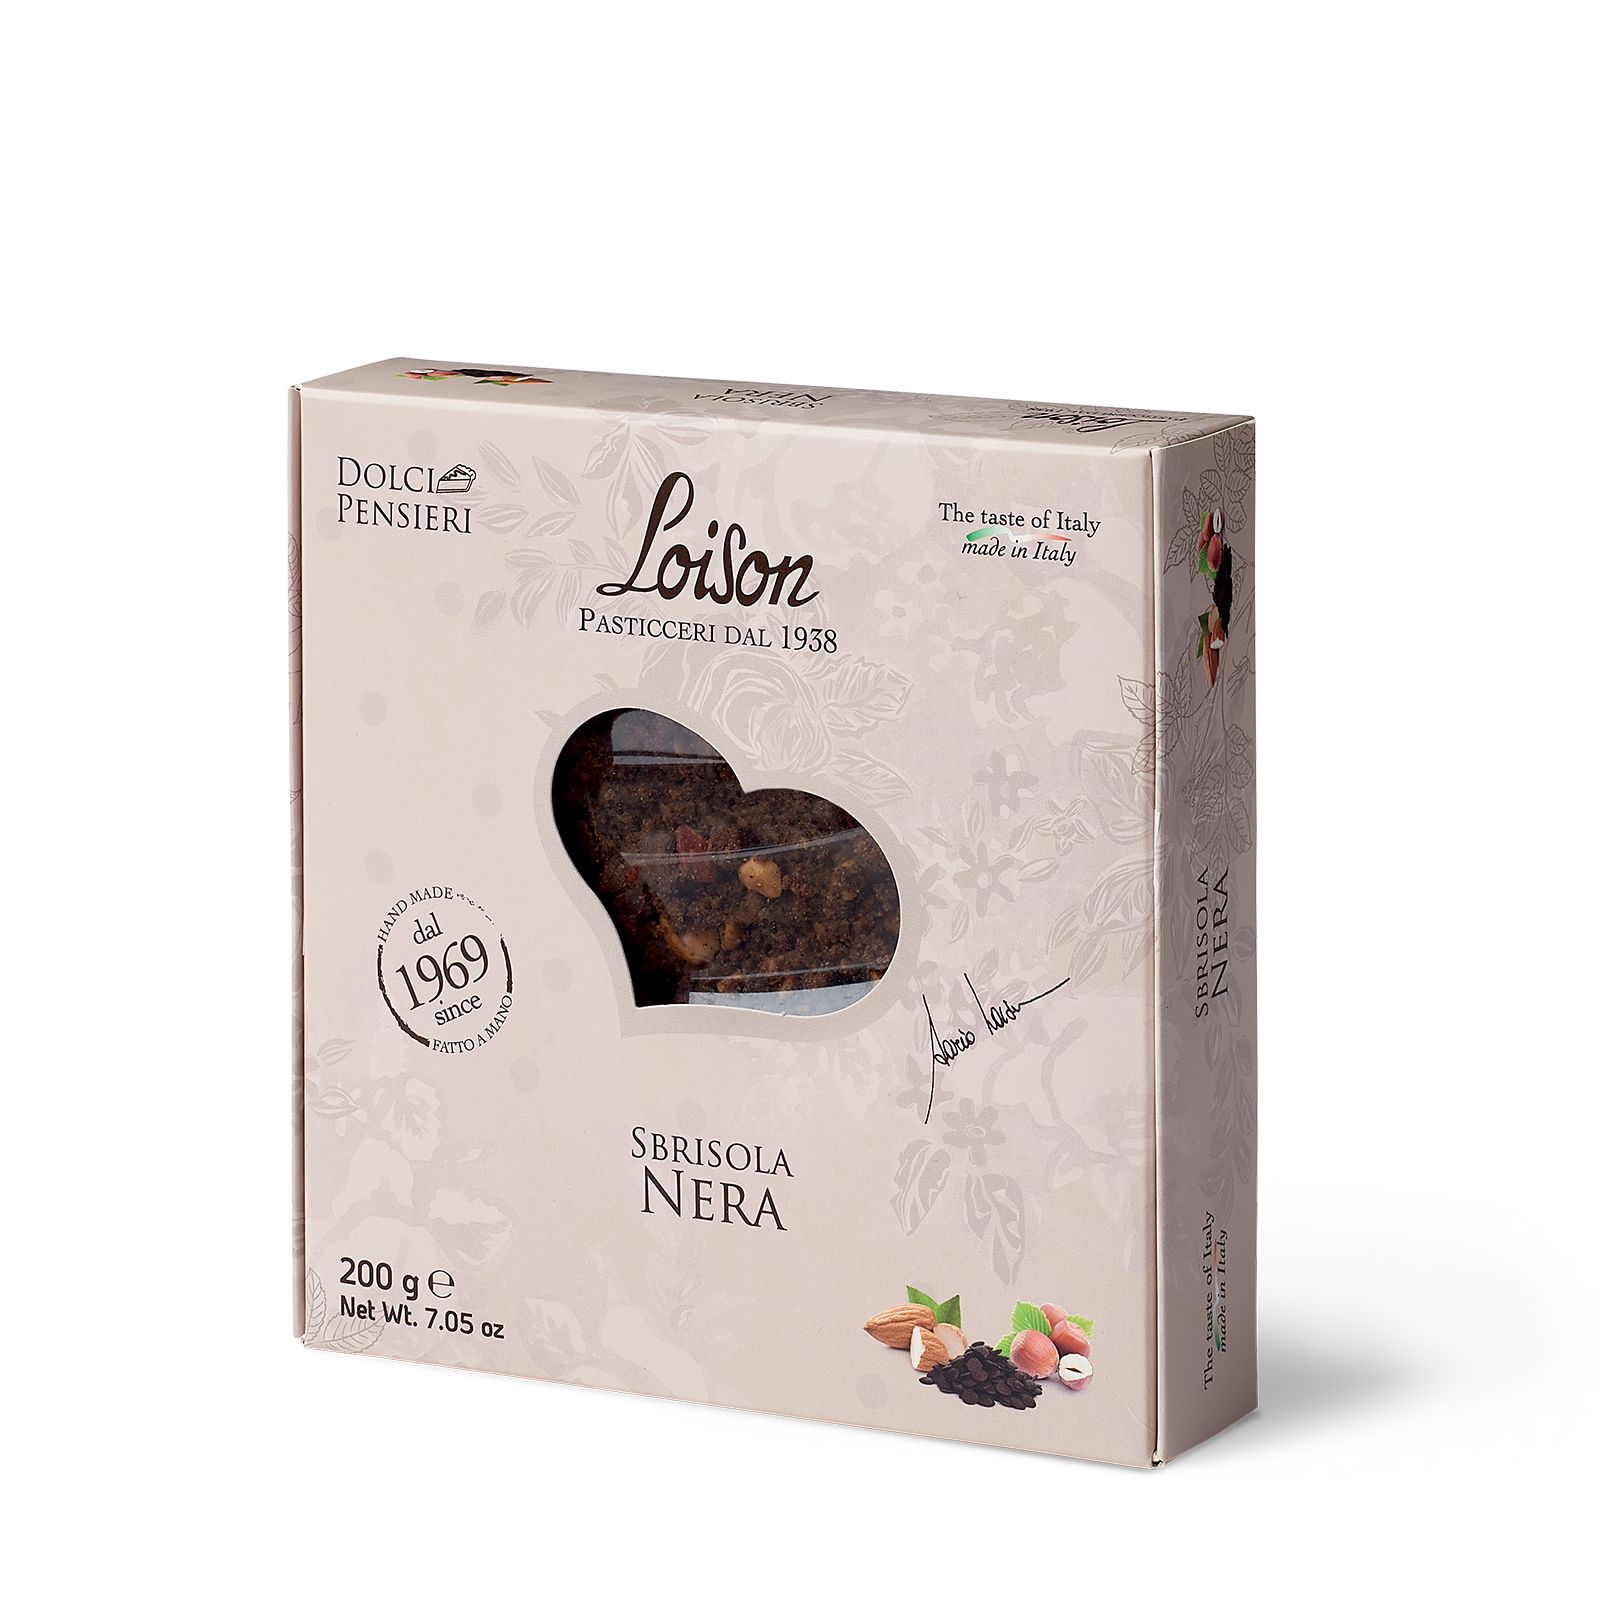 Sbrisola Nera torta con mandorle, nocciole Piemonte IGP e crema al cacao – 200 gr